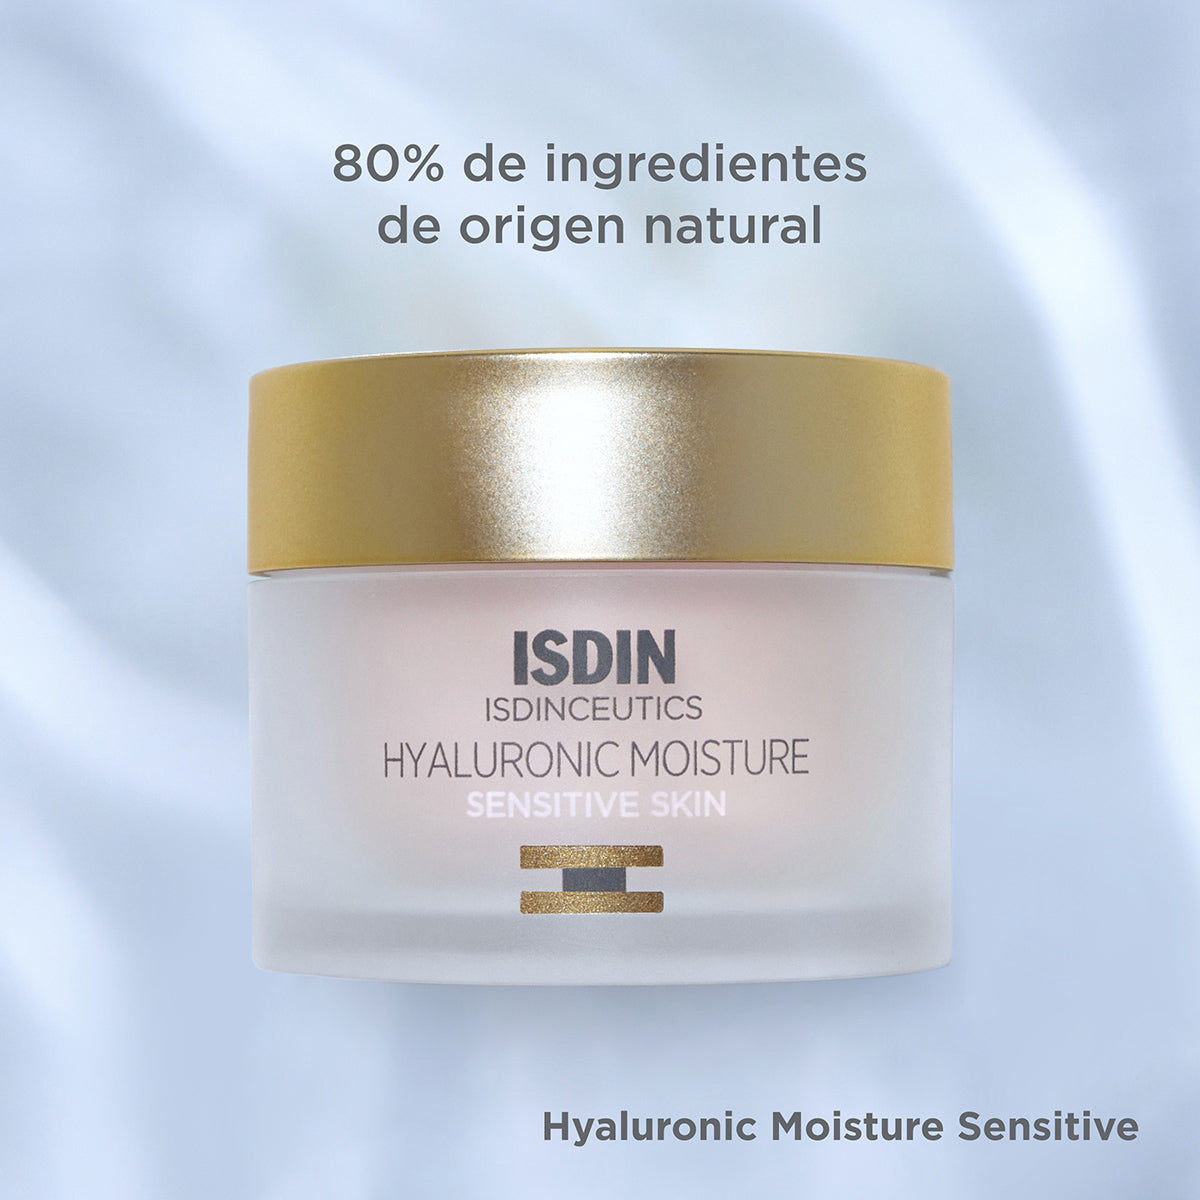 Isdinceutics Hyaluronic Moisture Sensitive Skin 1 Tarro 50 G